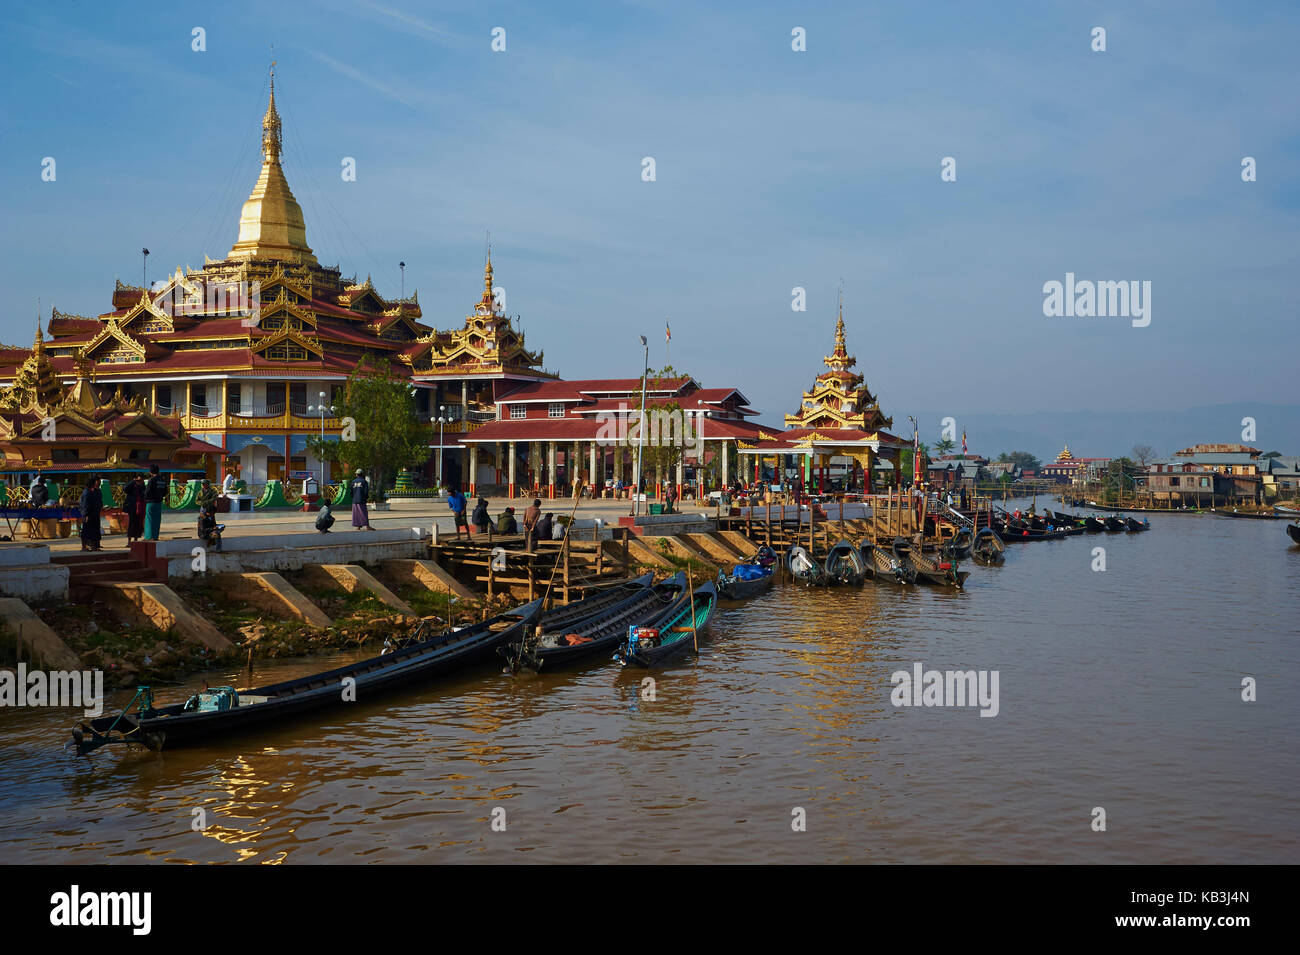 La pagode phaung daw oo paya temple, le Myanmar, l'Asie, Banque D'Images